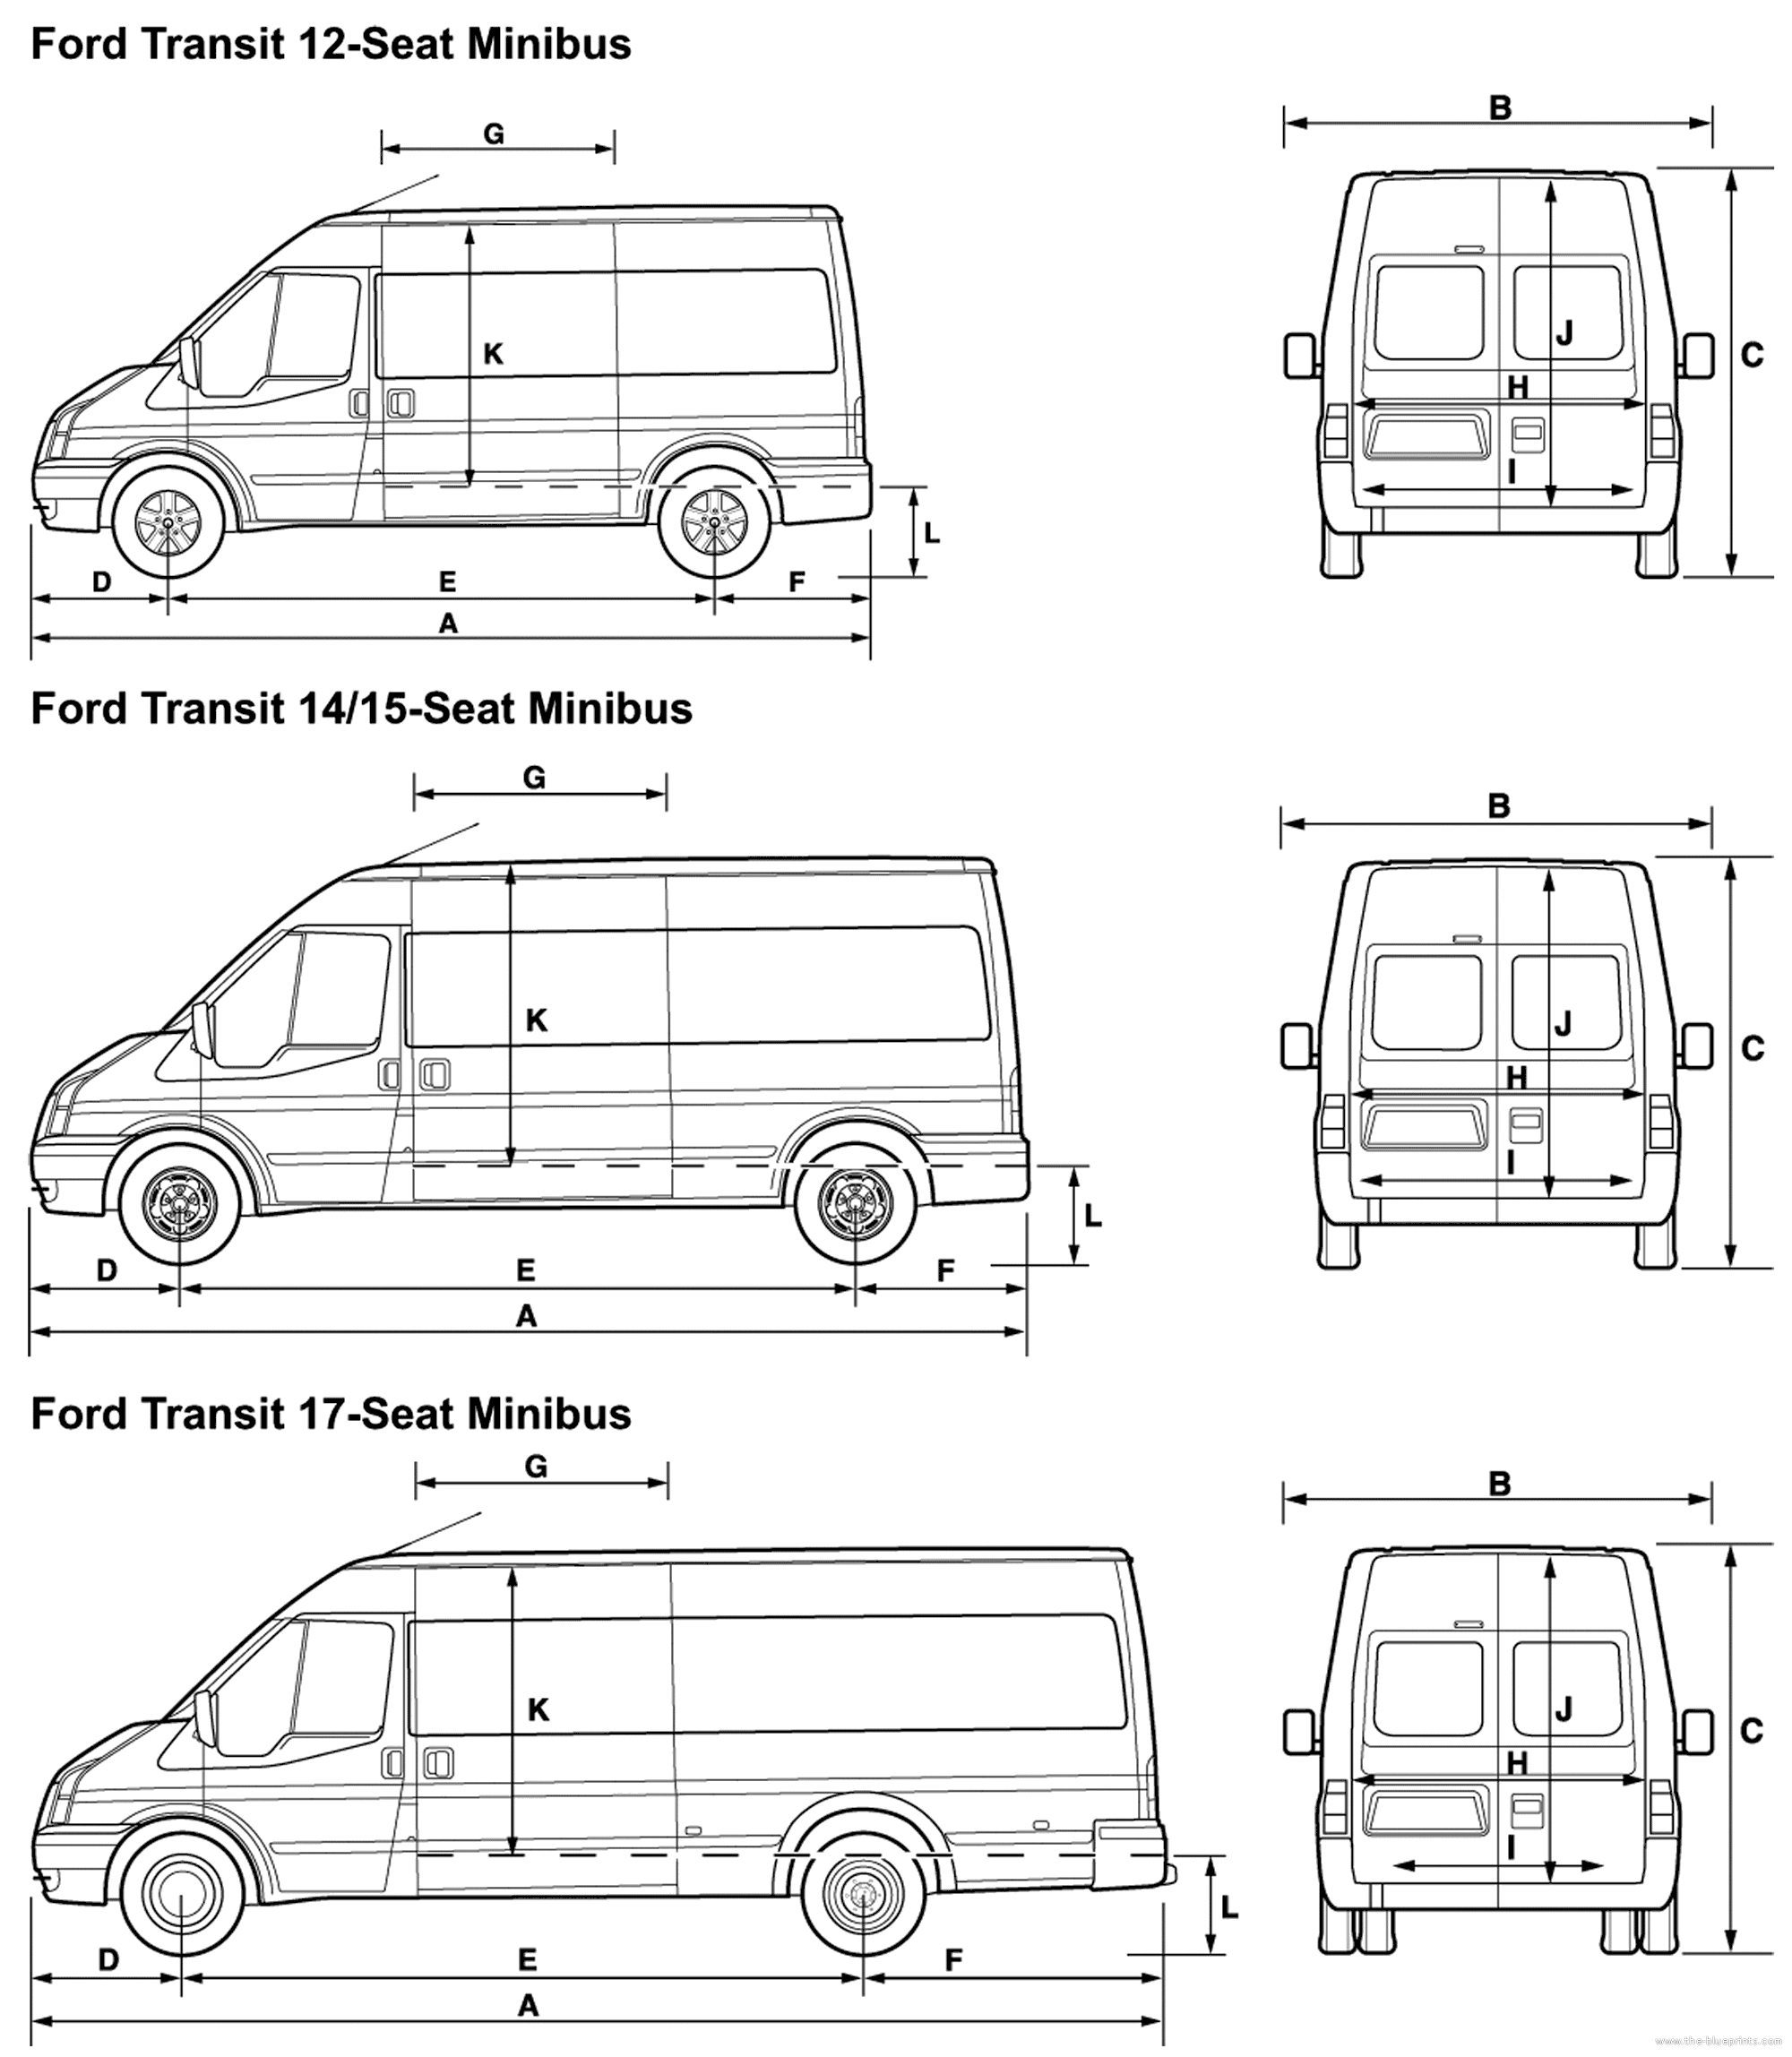 Ford transit van technical drawing #4